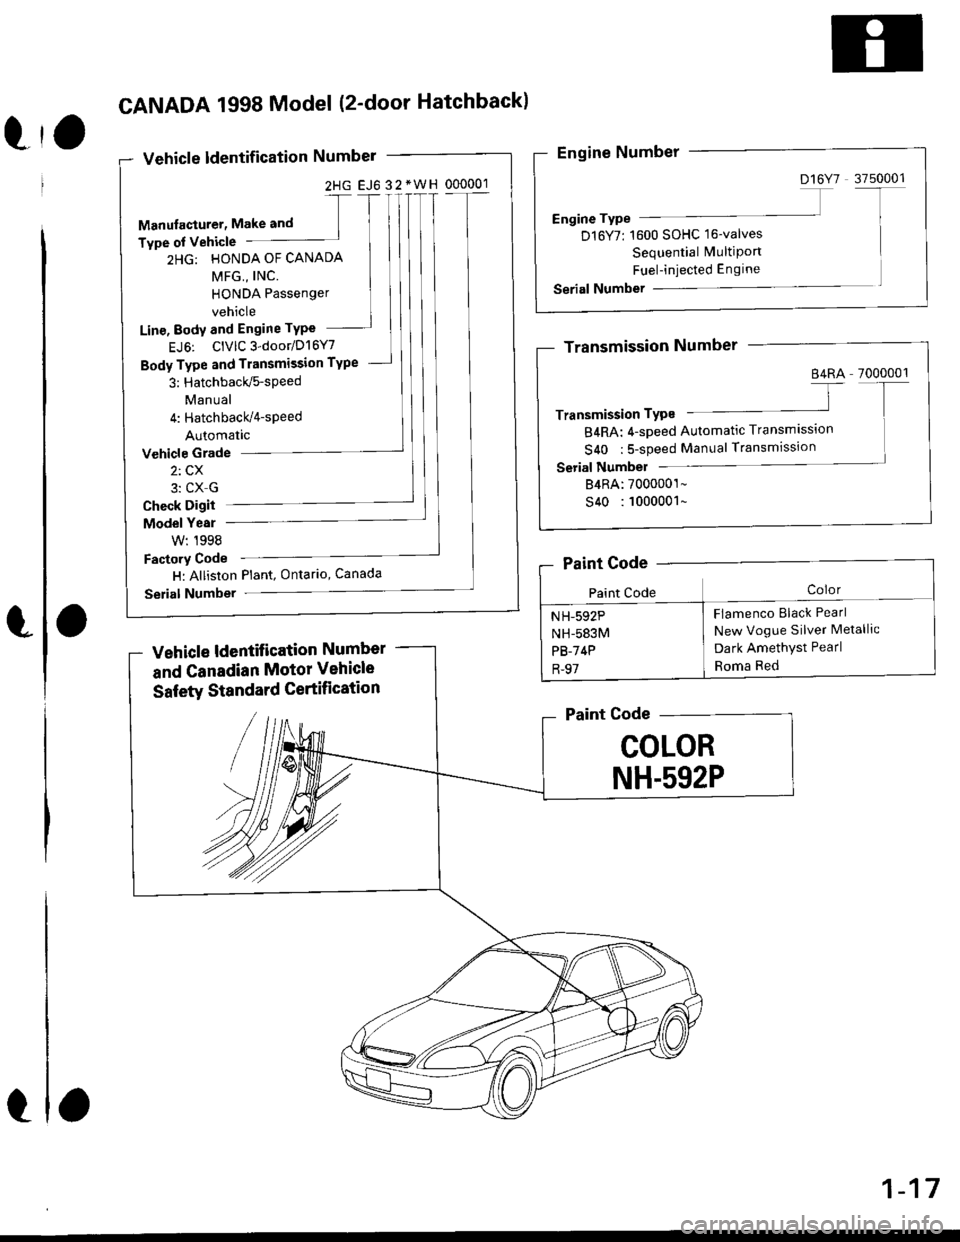 HONDA CIVIC 1999 6.G Workshop Manual 2HG EJ6 32+WH 000001
trO
CANADA 1998 Model (2-door Hatchback)
Vehicle ldentification Number
Manulacturet, Make and
Type of Vehicle
2HG: HONDA OF CANADA
HONDA Passenger
vehicle
Line, Body and Engine TY